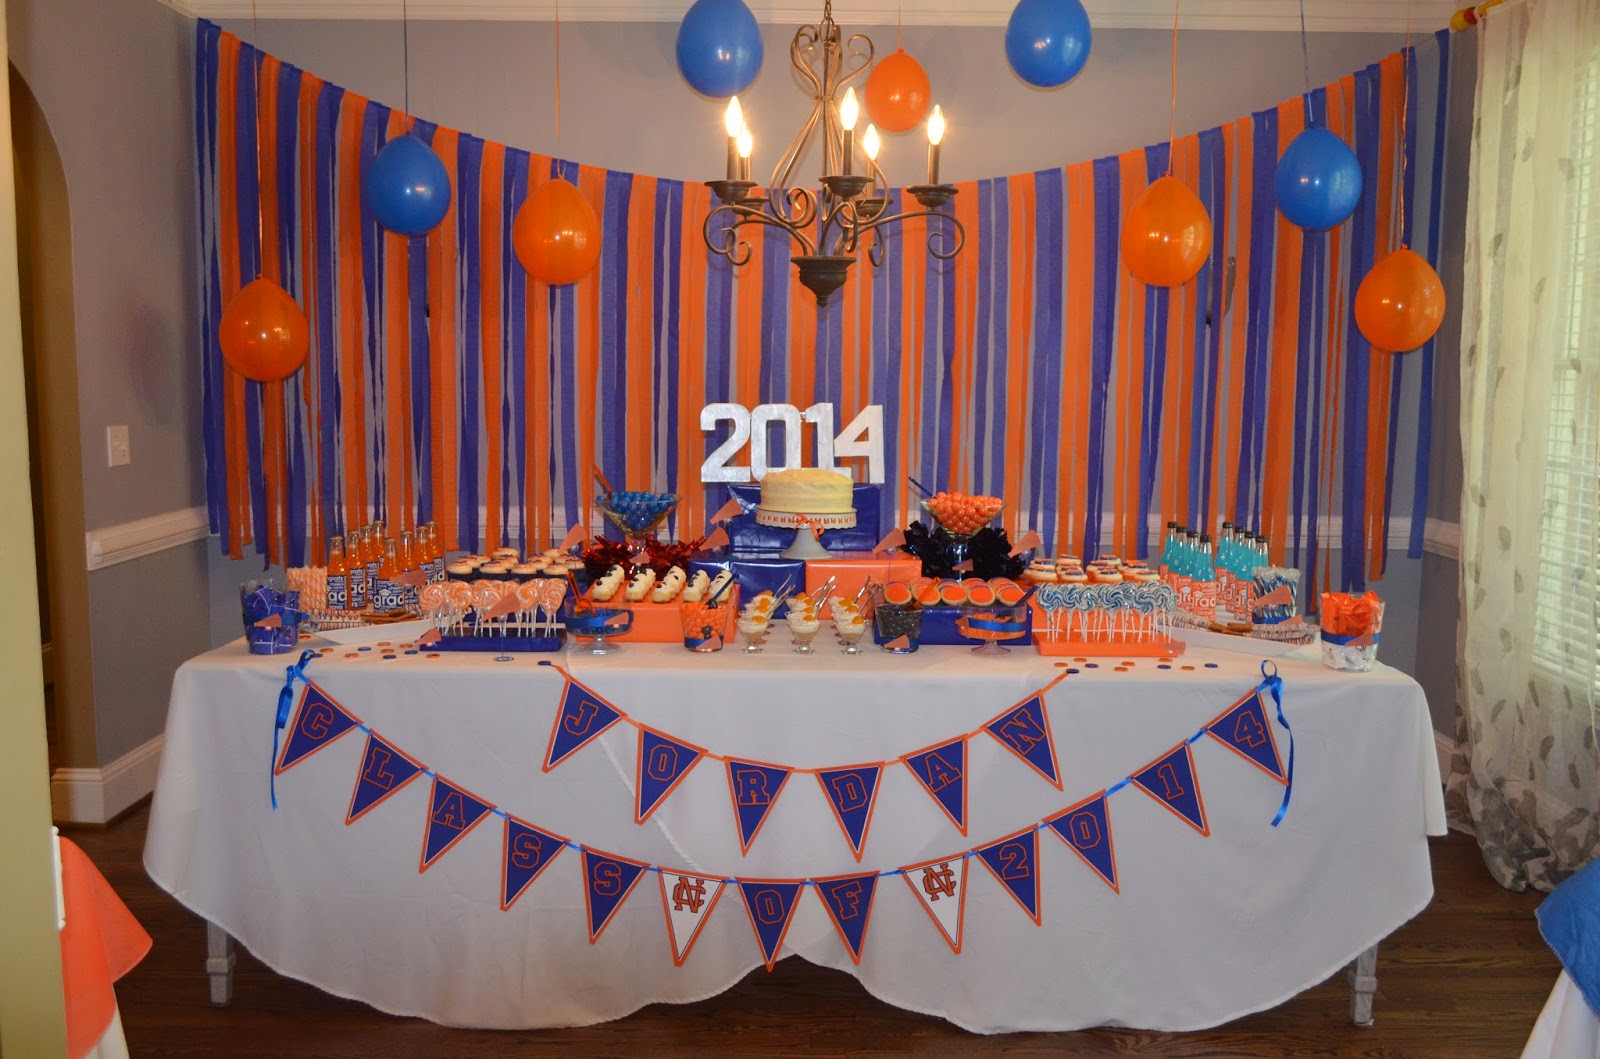 Ideas For A High School Graduation Party
 Cakegirl s Kitchen Blue and Orange Graduation Party